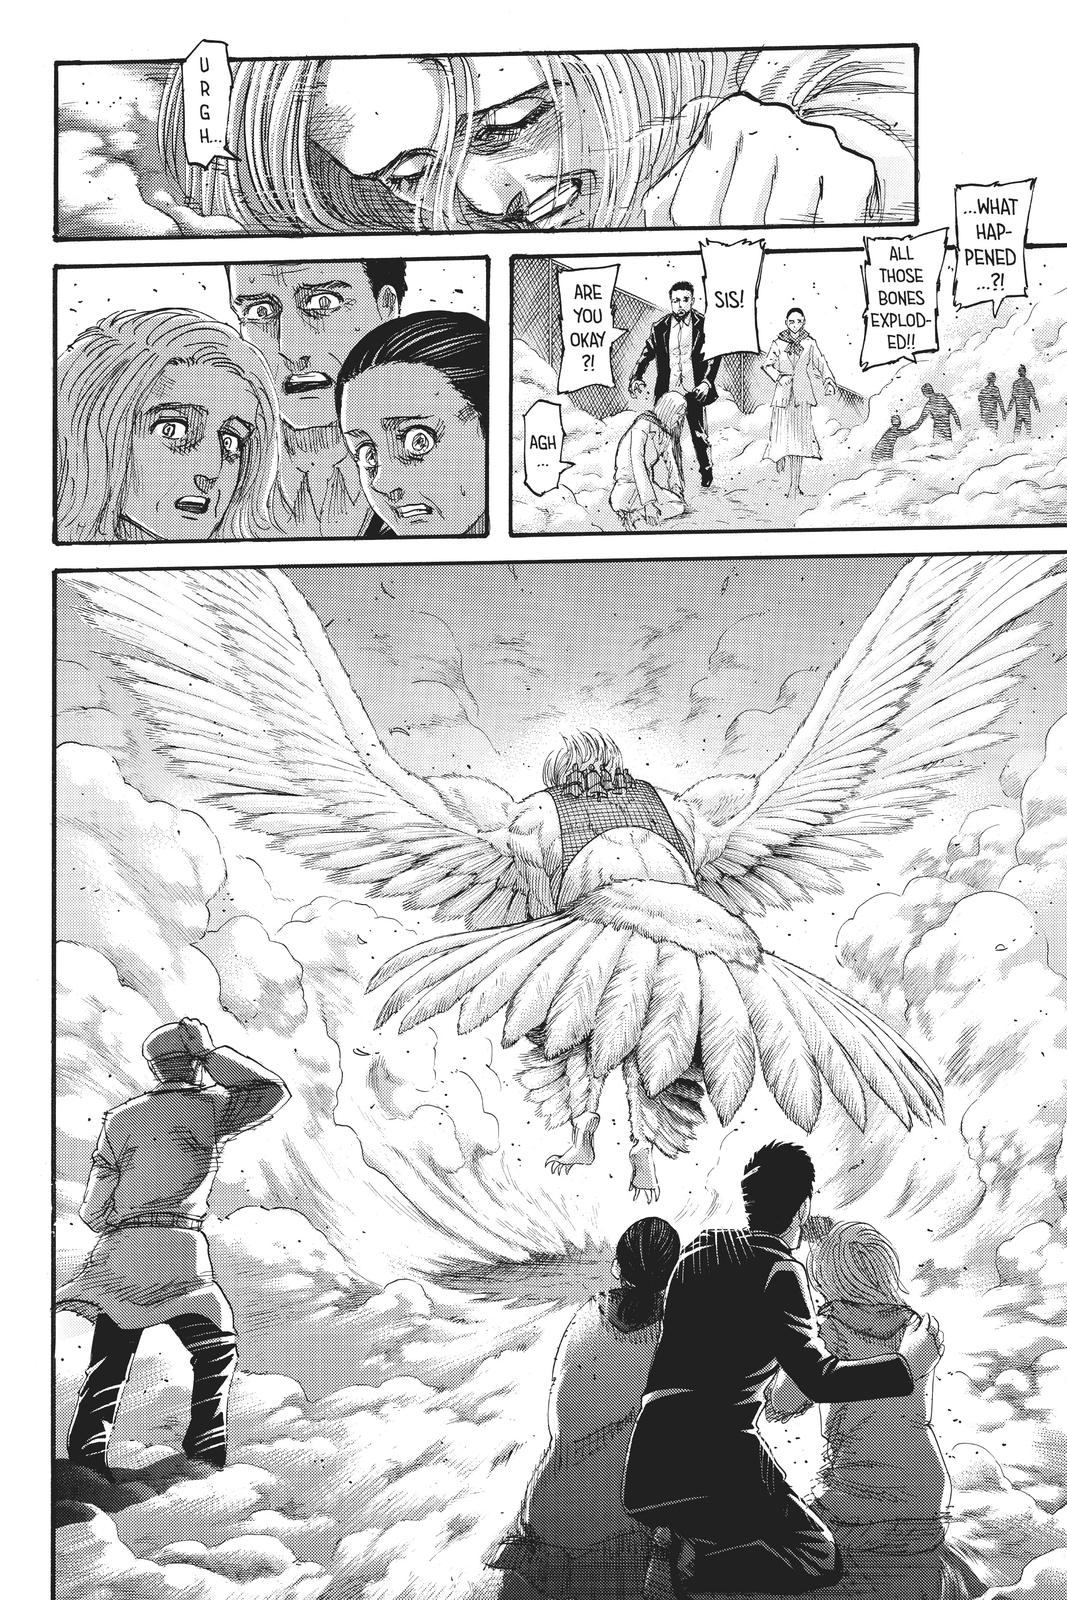 Shingeki No Kyojin, chapter 104 - Attack On Titan Manga Online